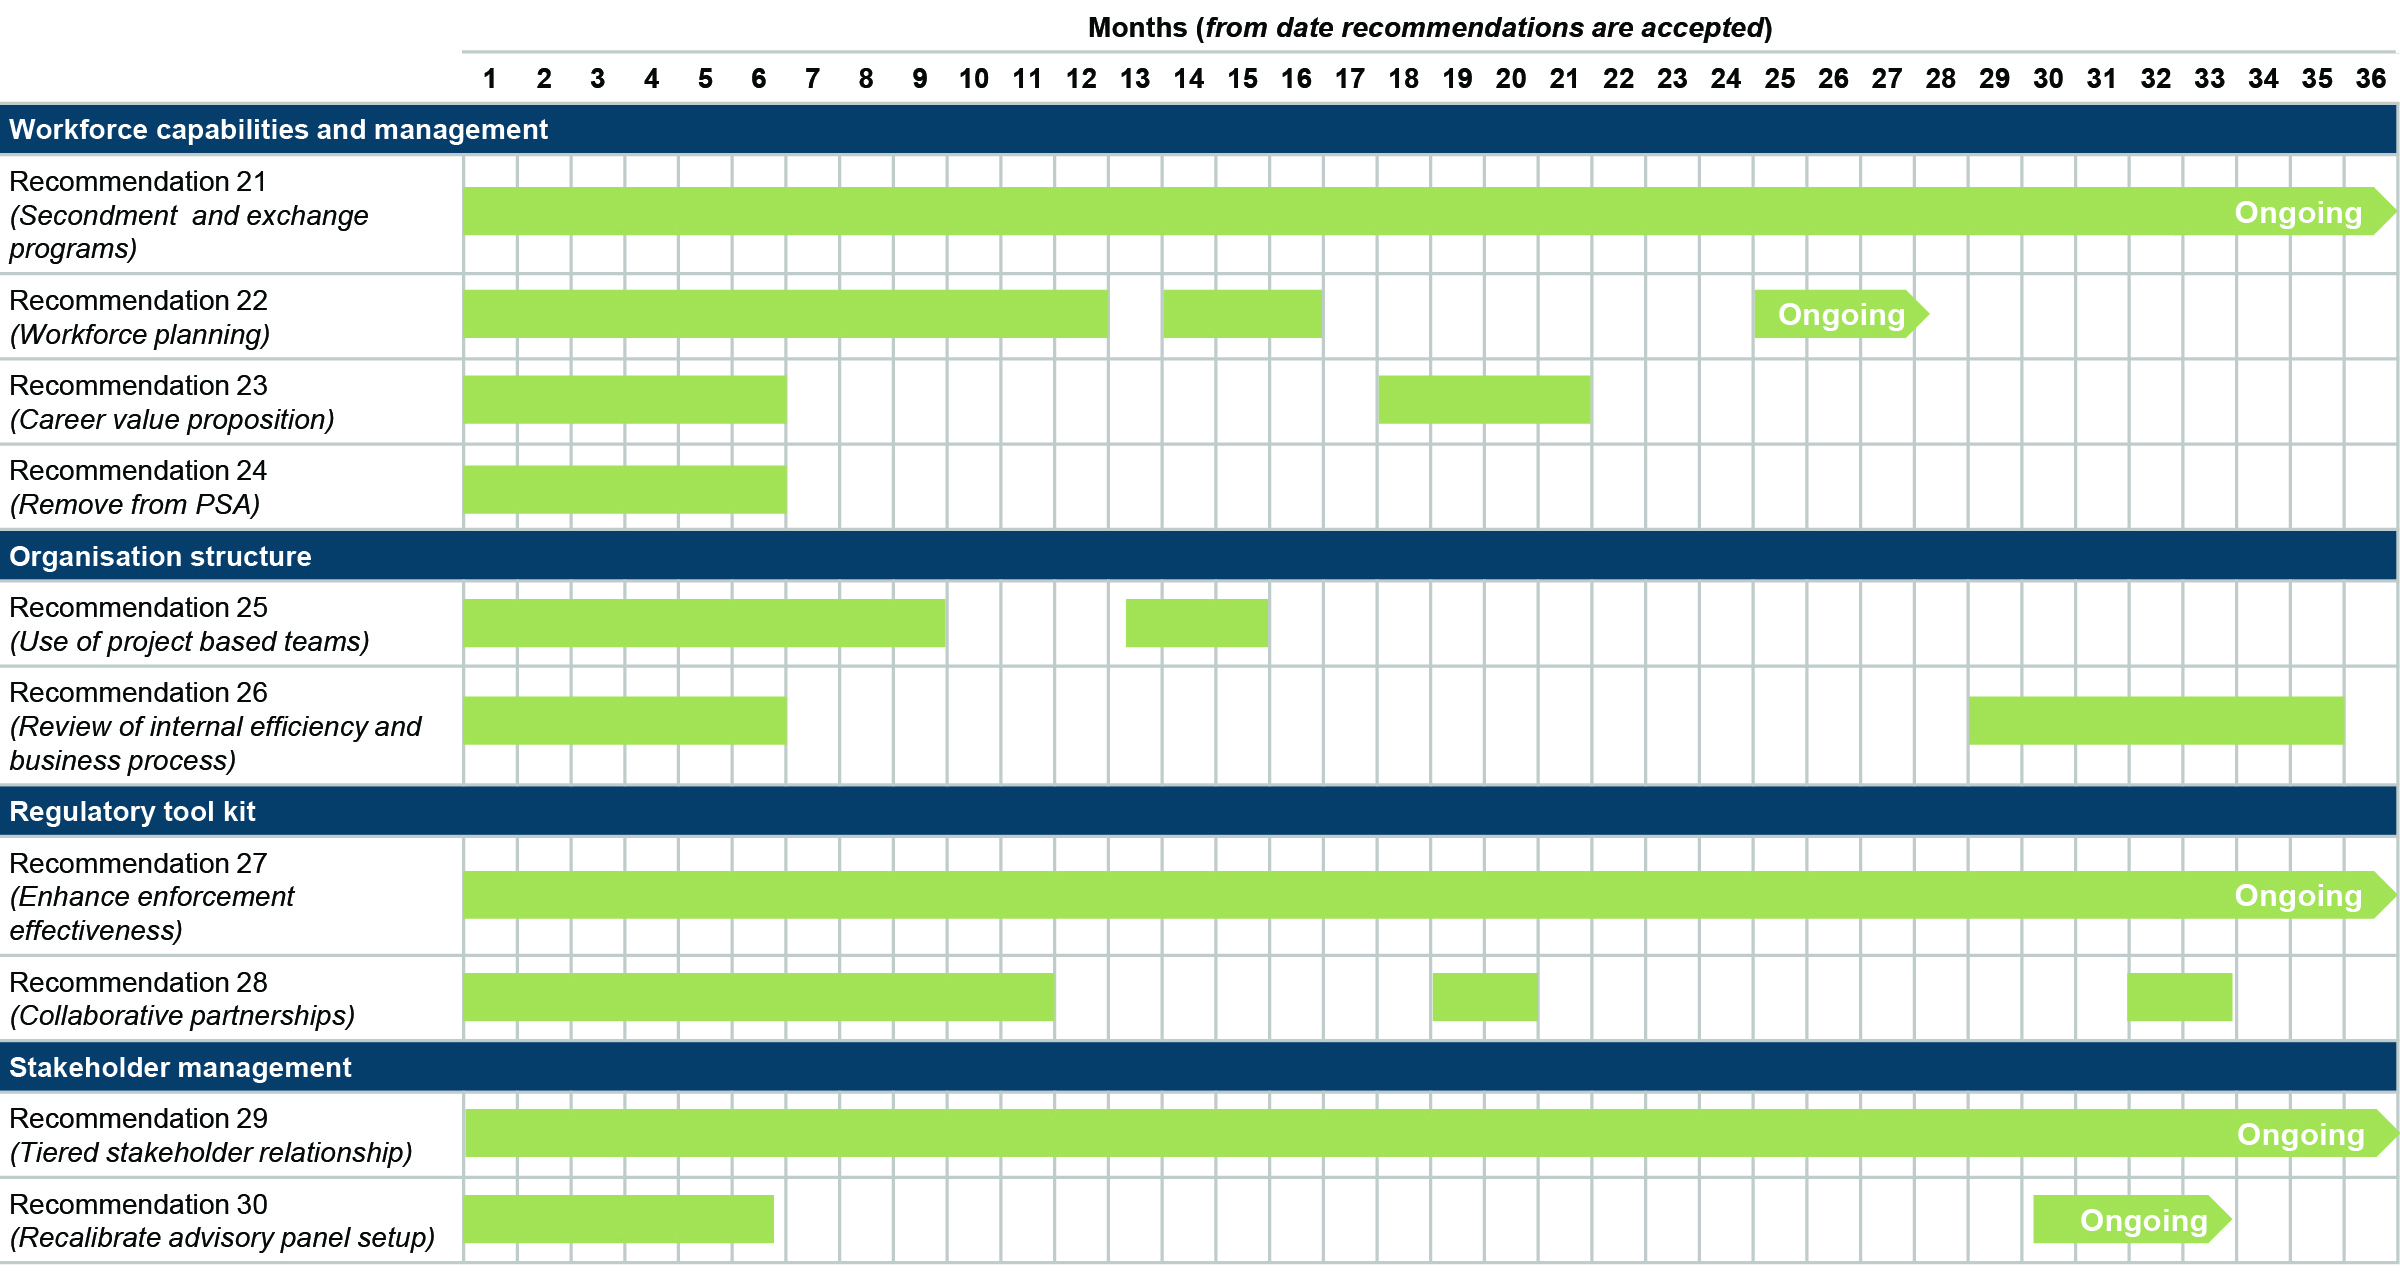 Figure 34: Delivery — proposed implementation timelines